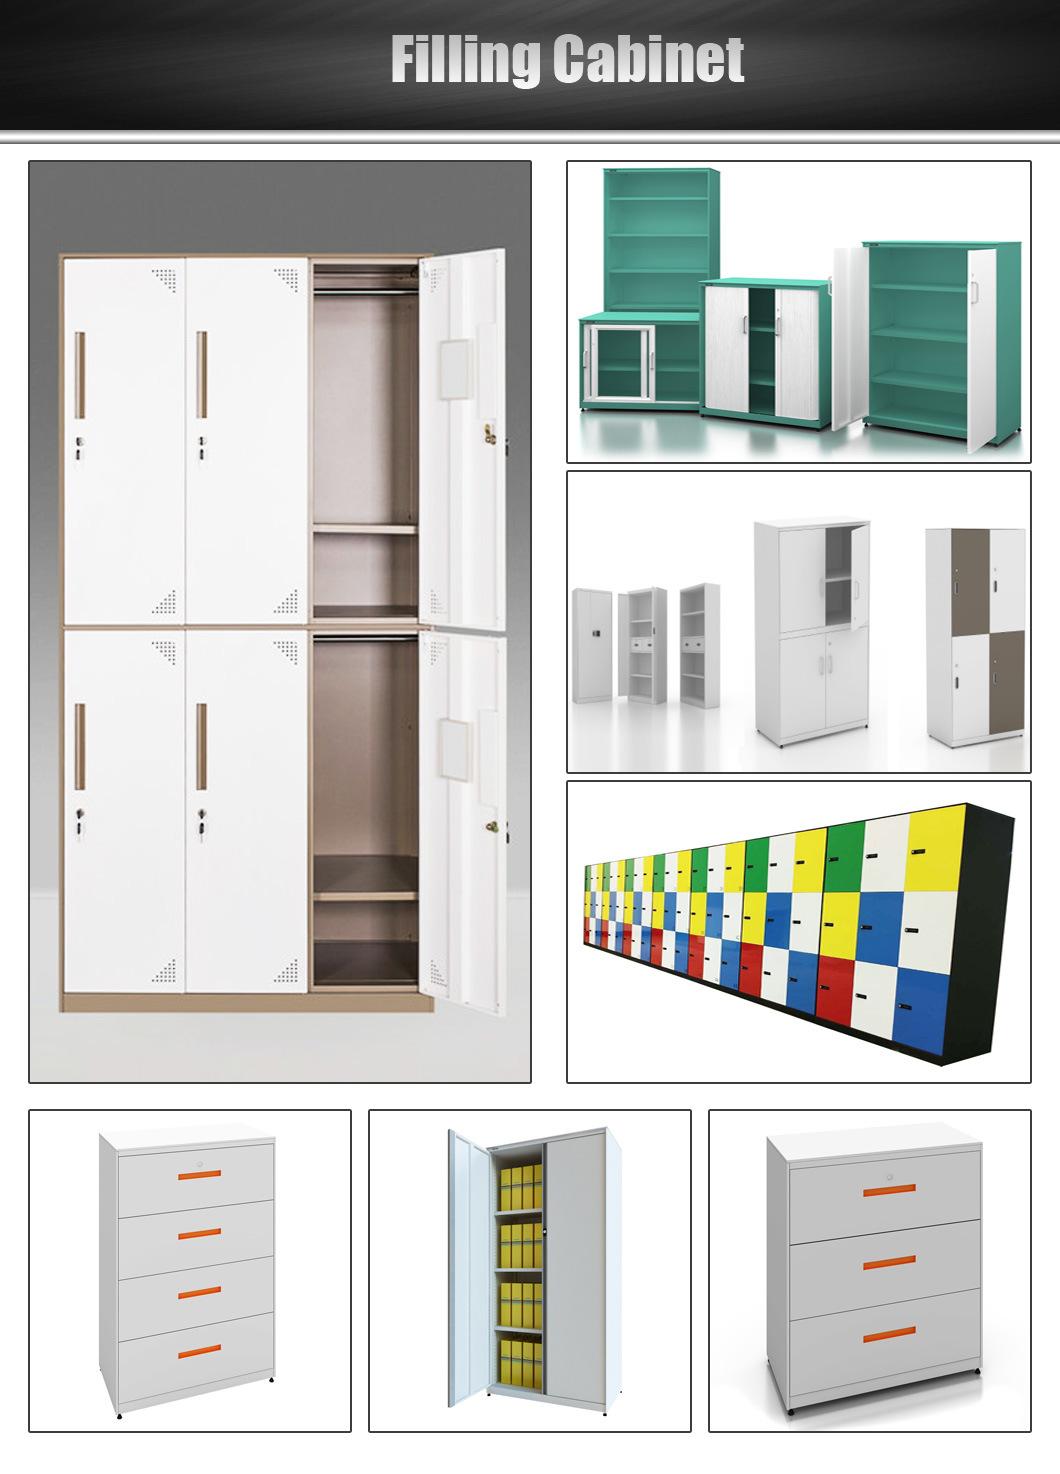 Modern Design Low Price Steel Stainless Locker with 6 Doors